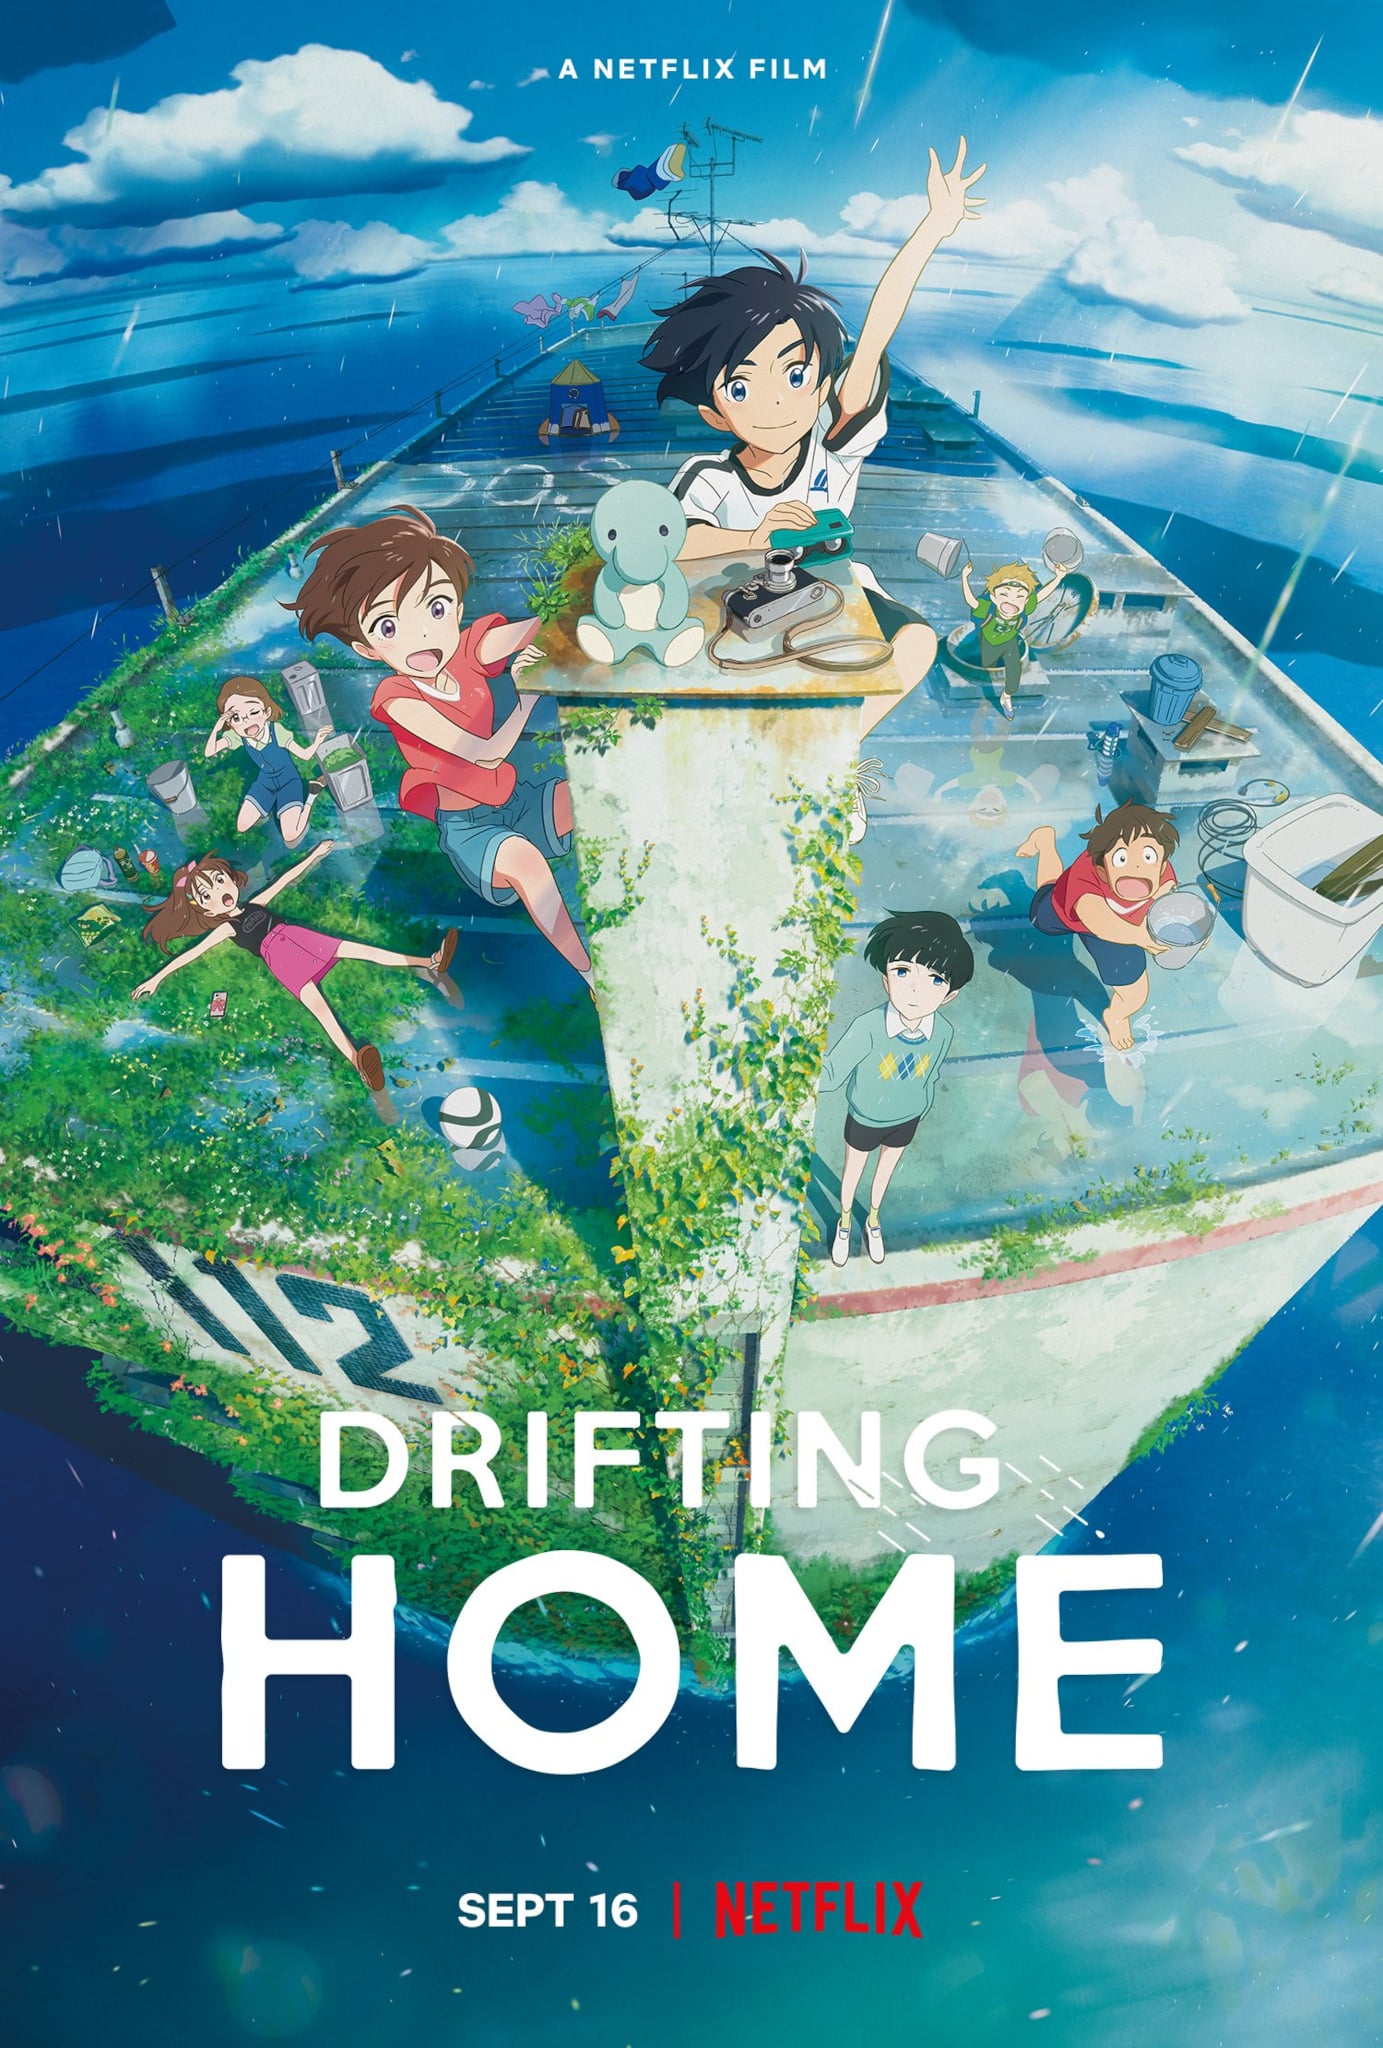 Le film Drifting Home révèle sa Date de Sortie - Anim'Otaku